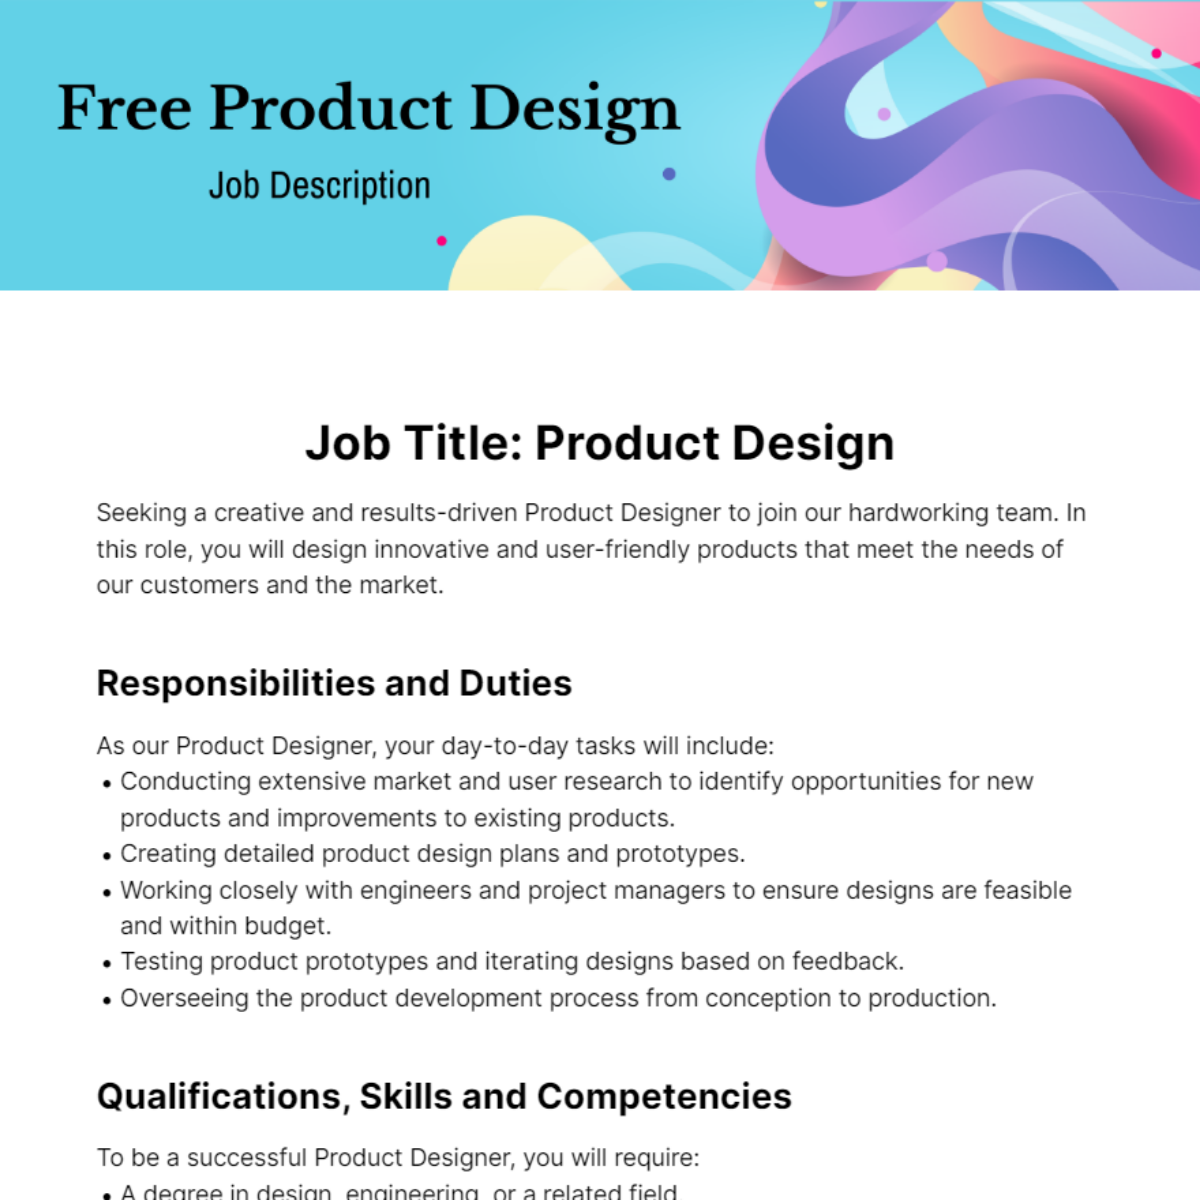 Free Product Design Job Description Template